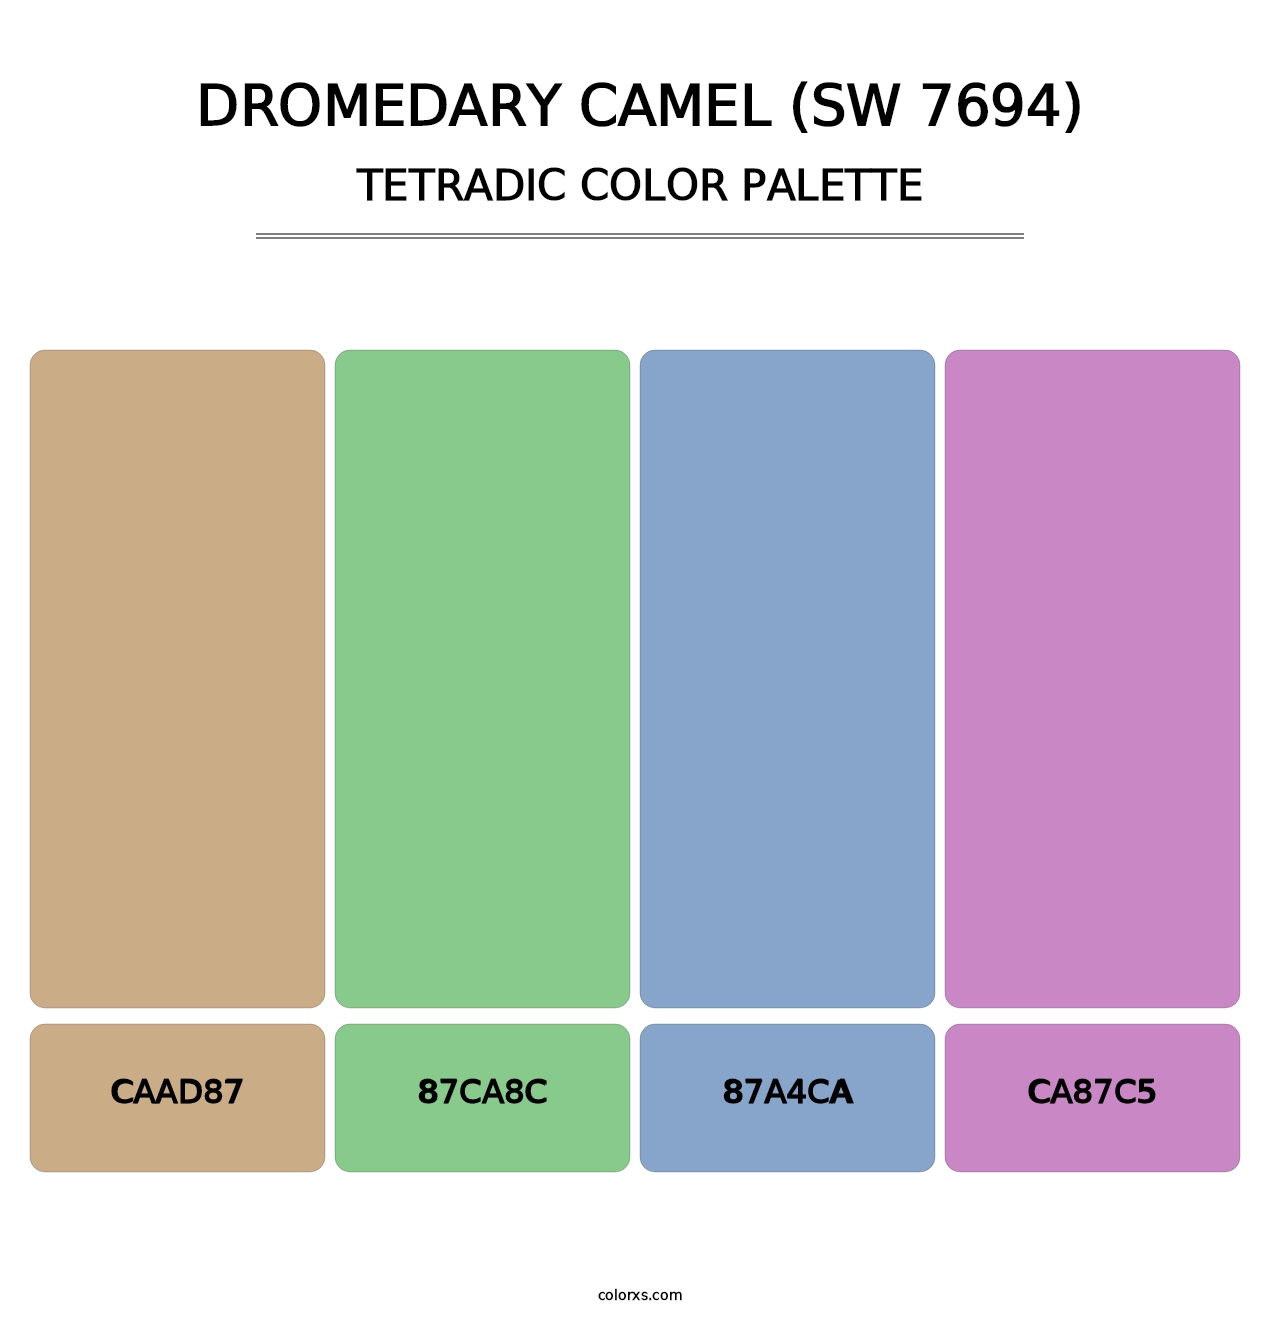 Dromedary Camel (SW 7694) - Tetradic Color Palette